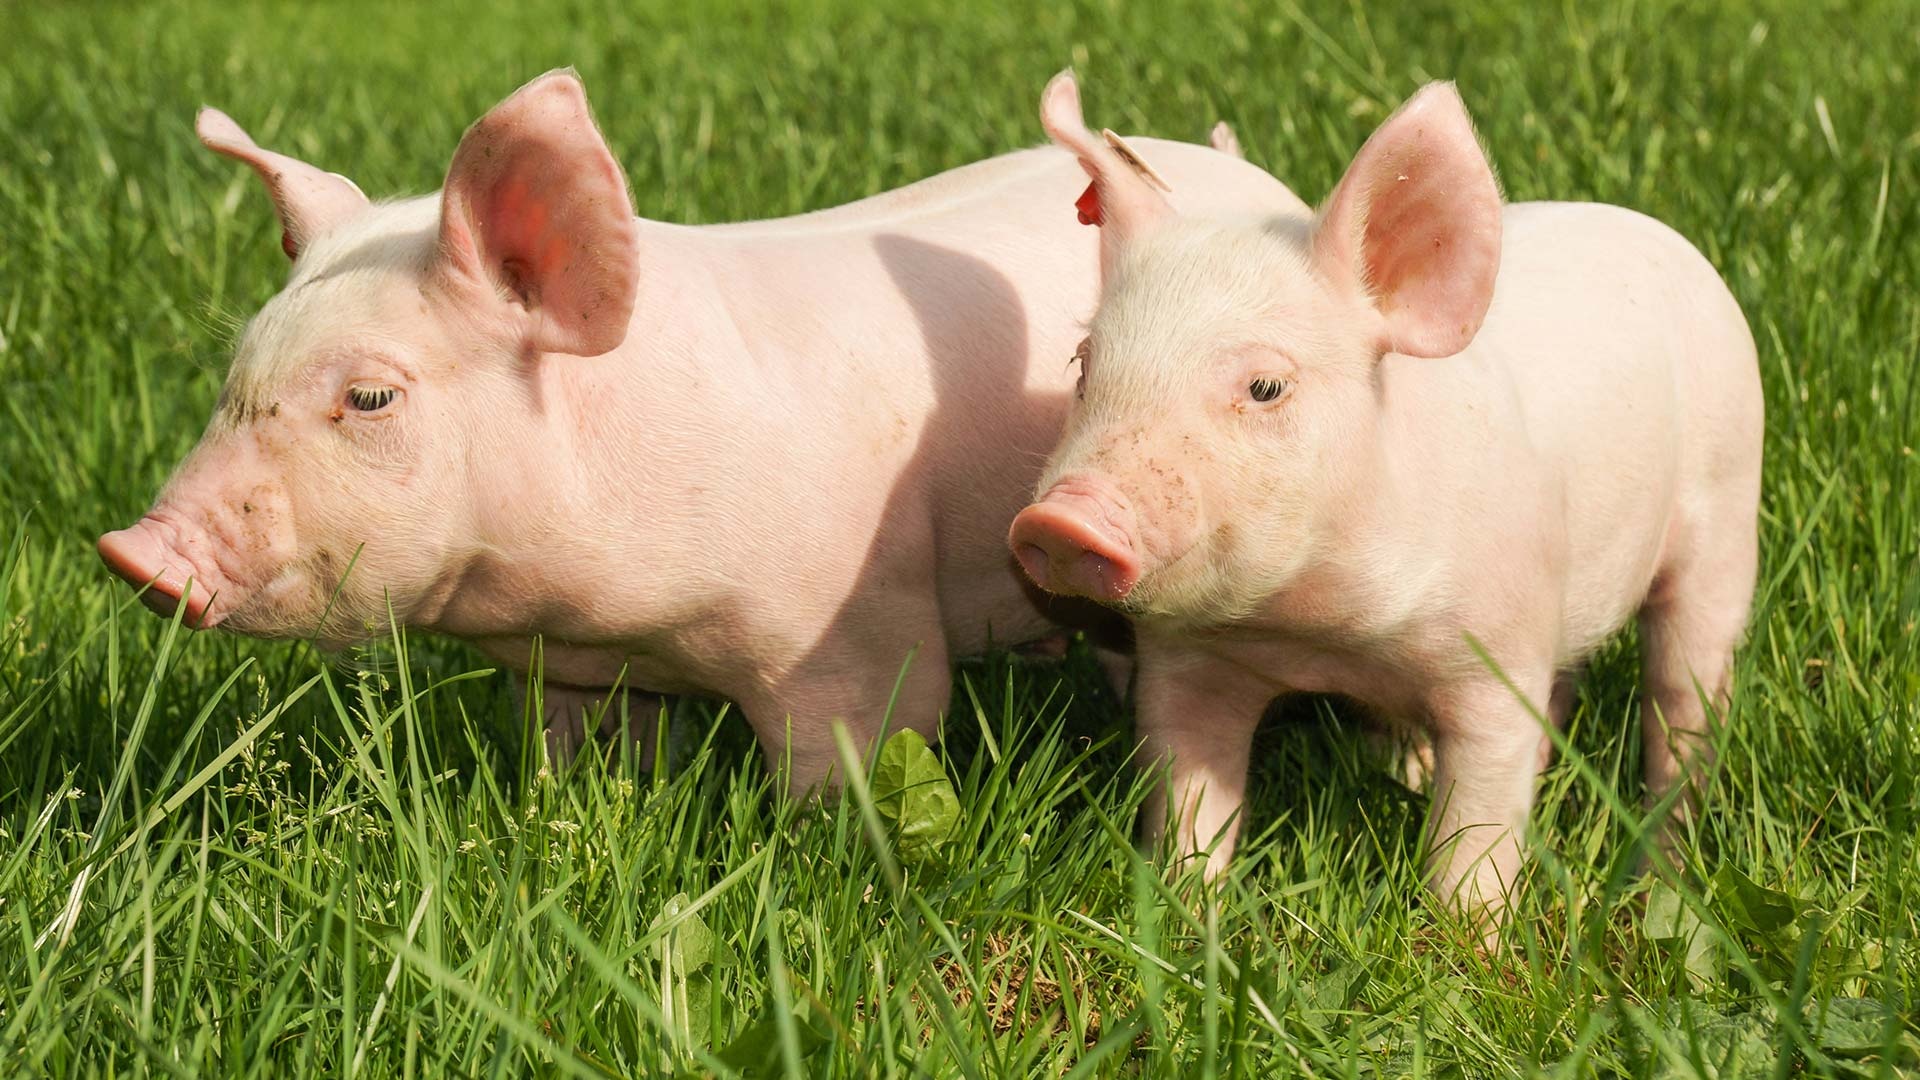 Sarcoptes pig info, Pig health tips, Veterinary advice, Farm animal care, 1920x1080 Full HD Desktop